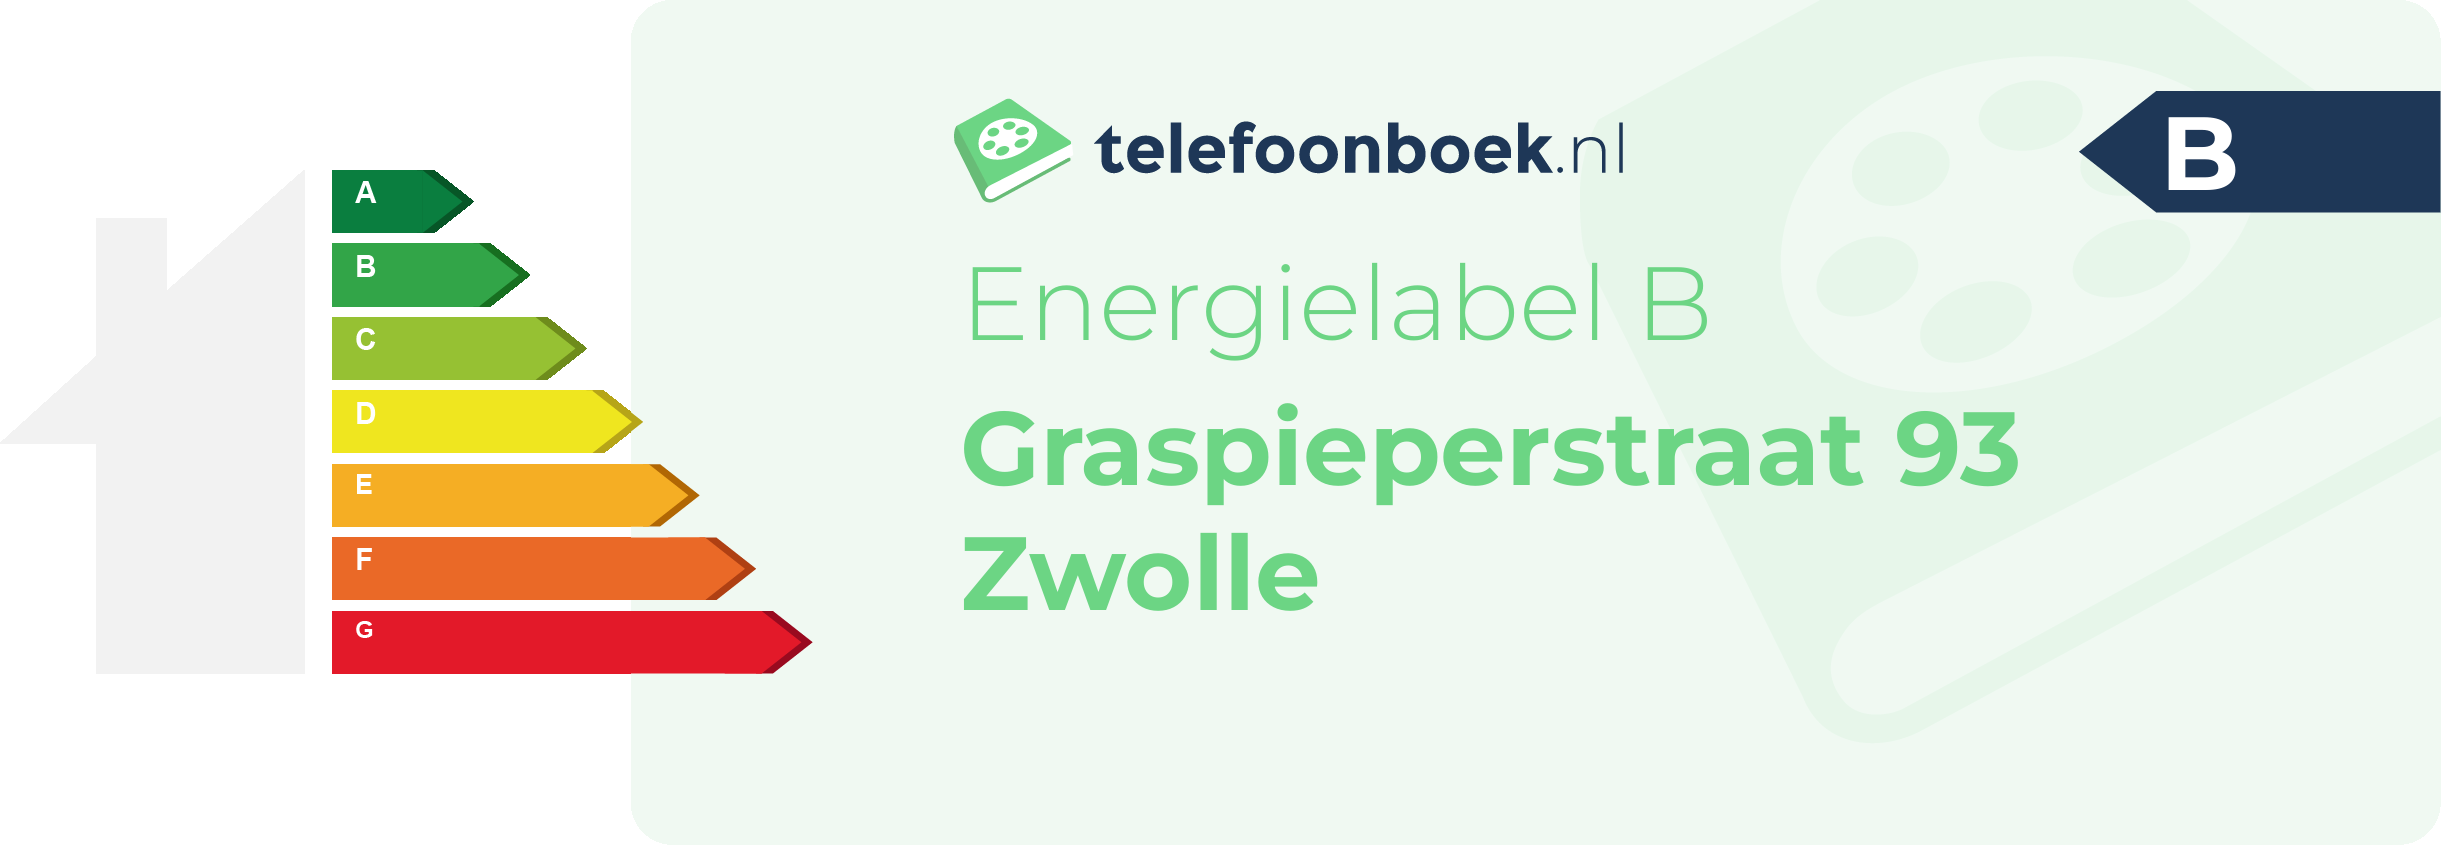 Energielabel Graspieperstraat 93 Zwolle